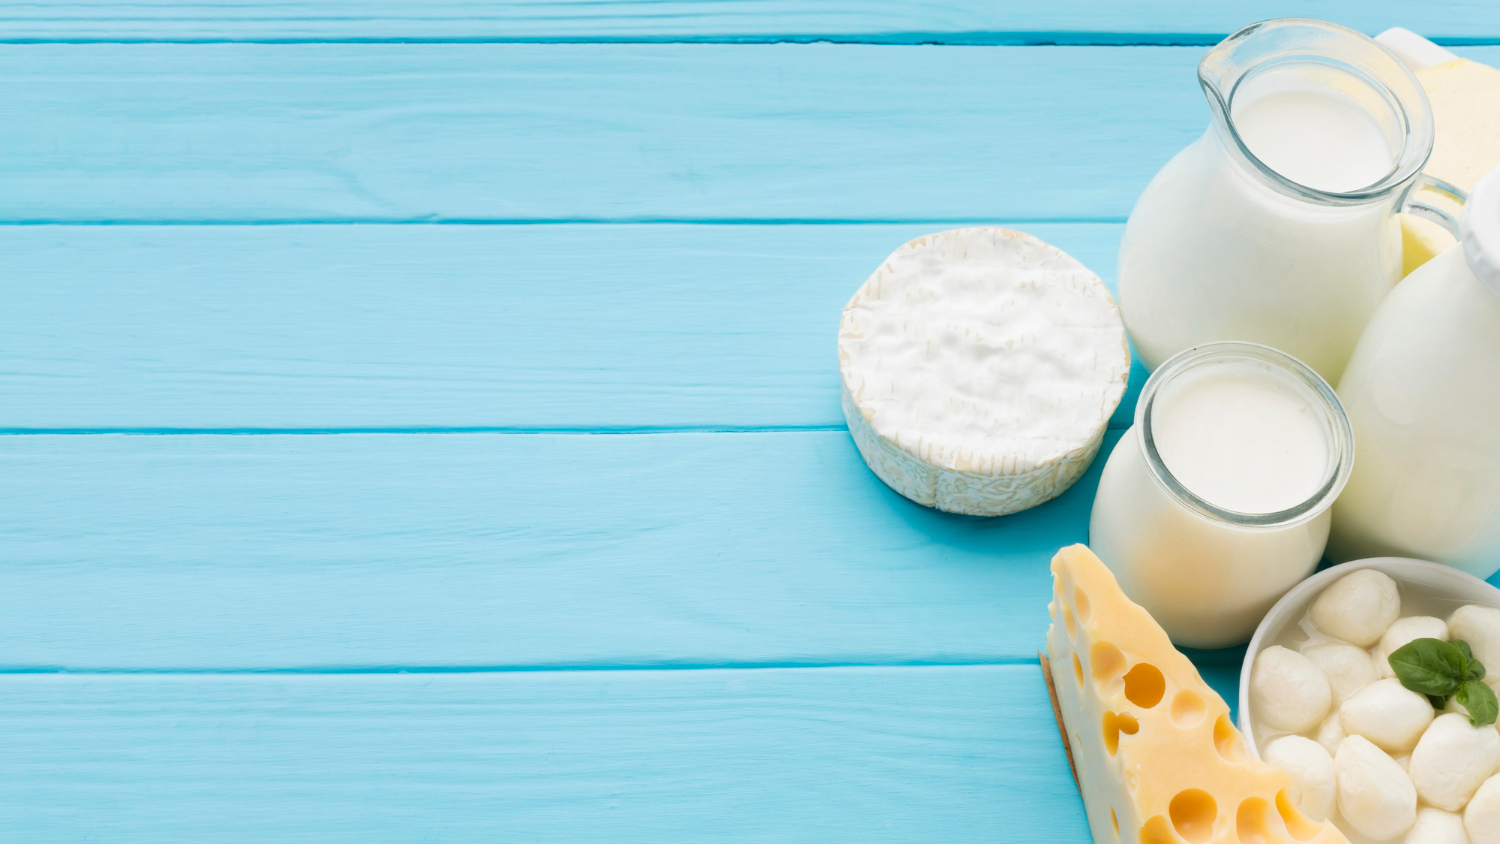 a alergia à proteína do leite de vaca pode provocar sintomas leves e graves